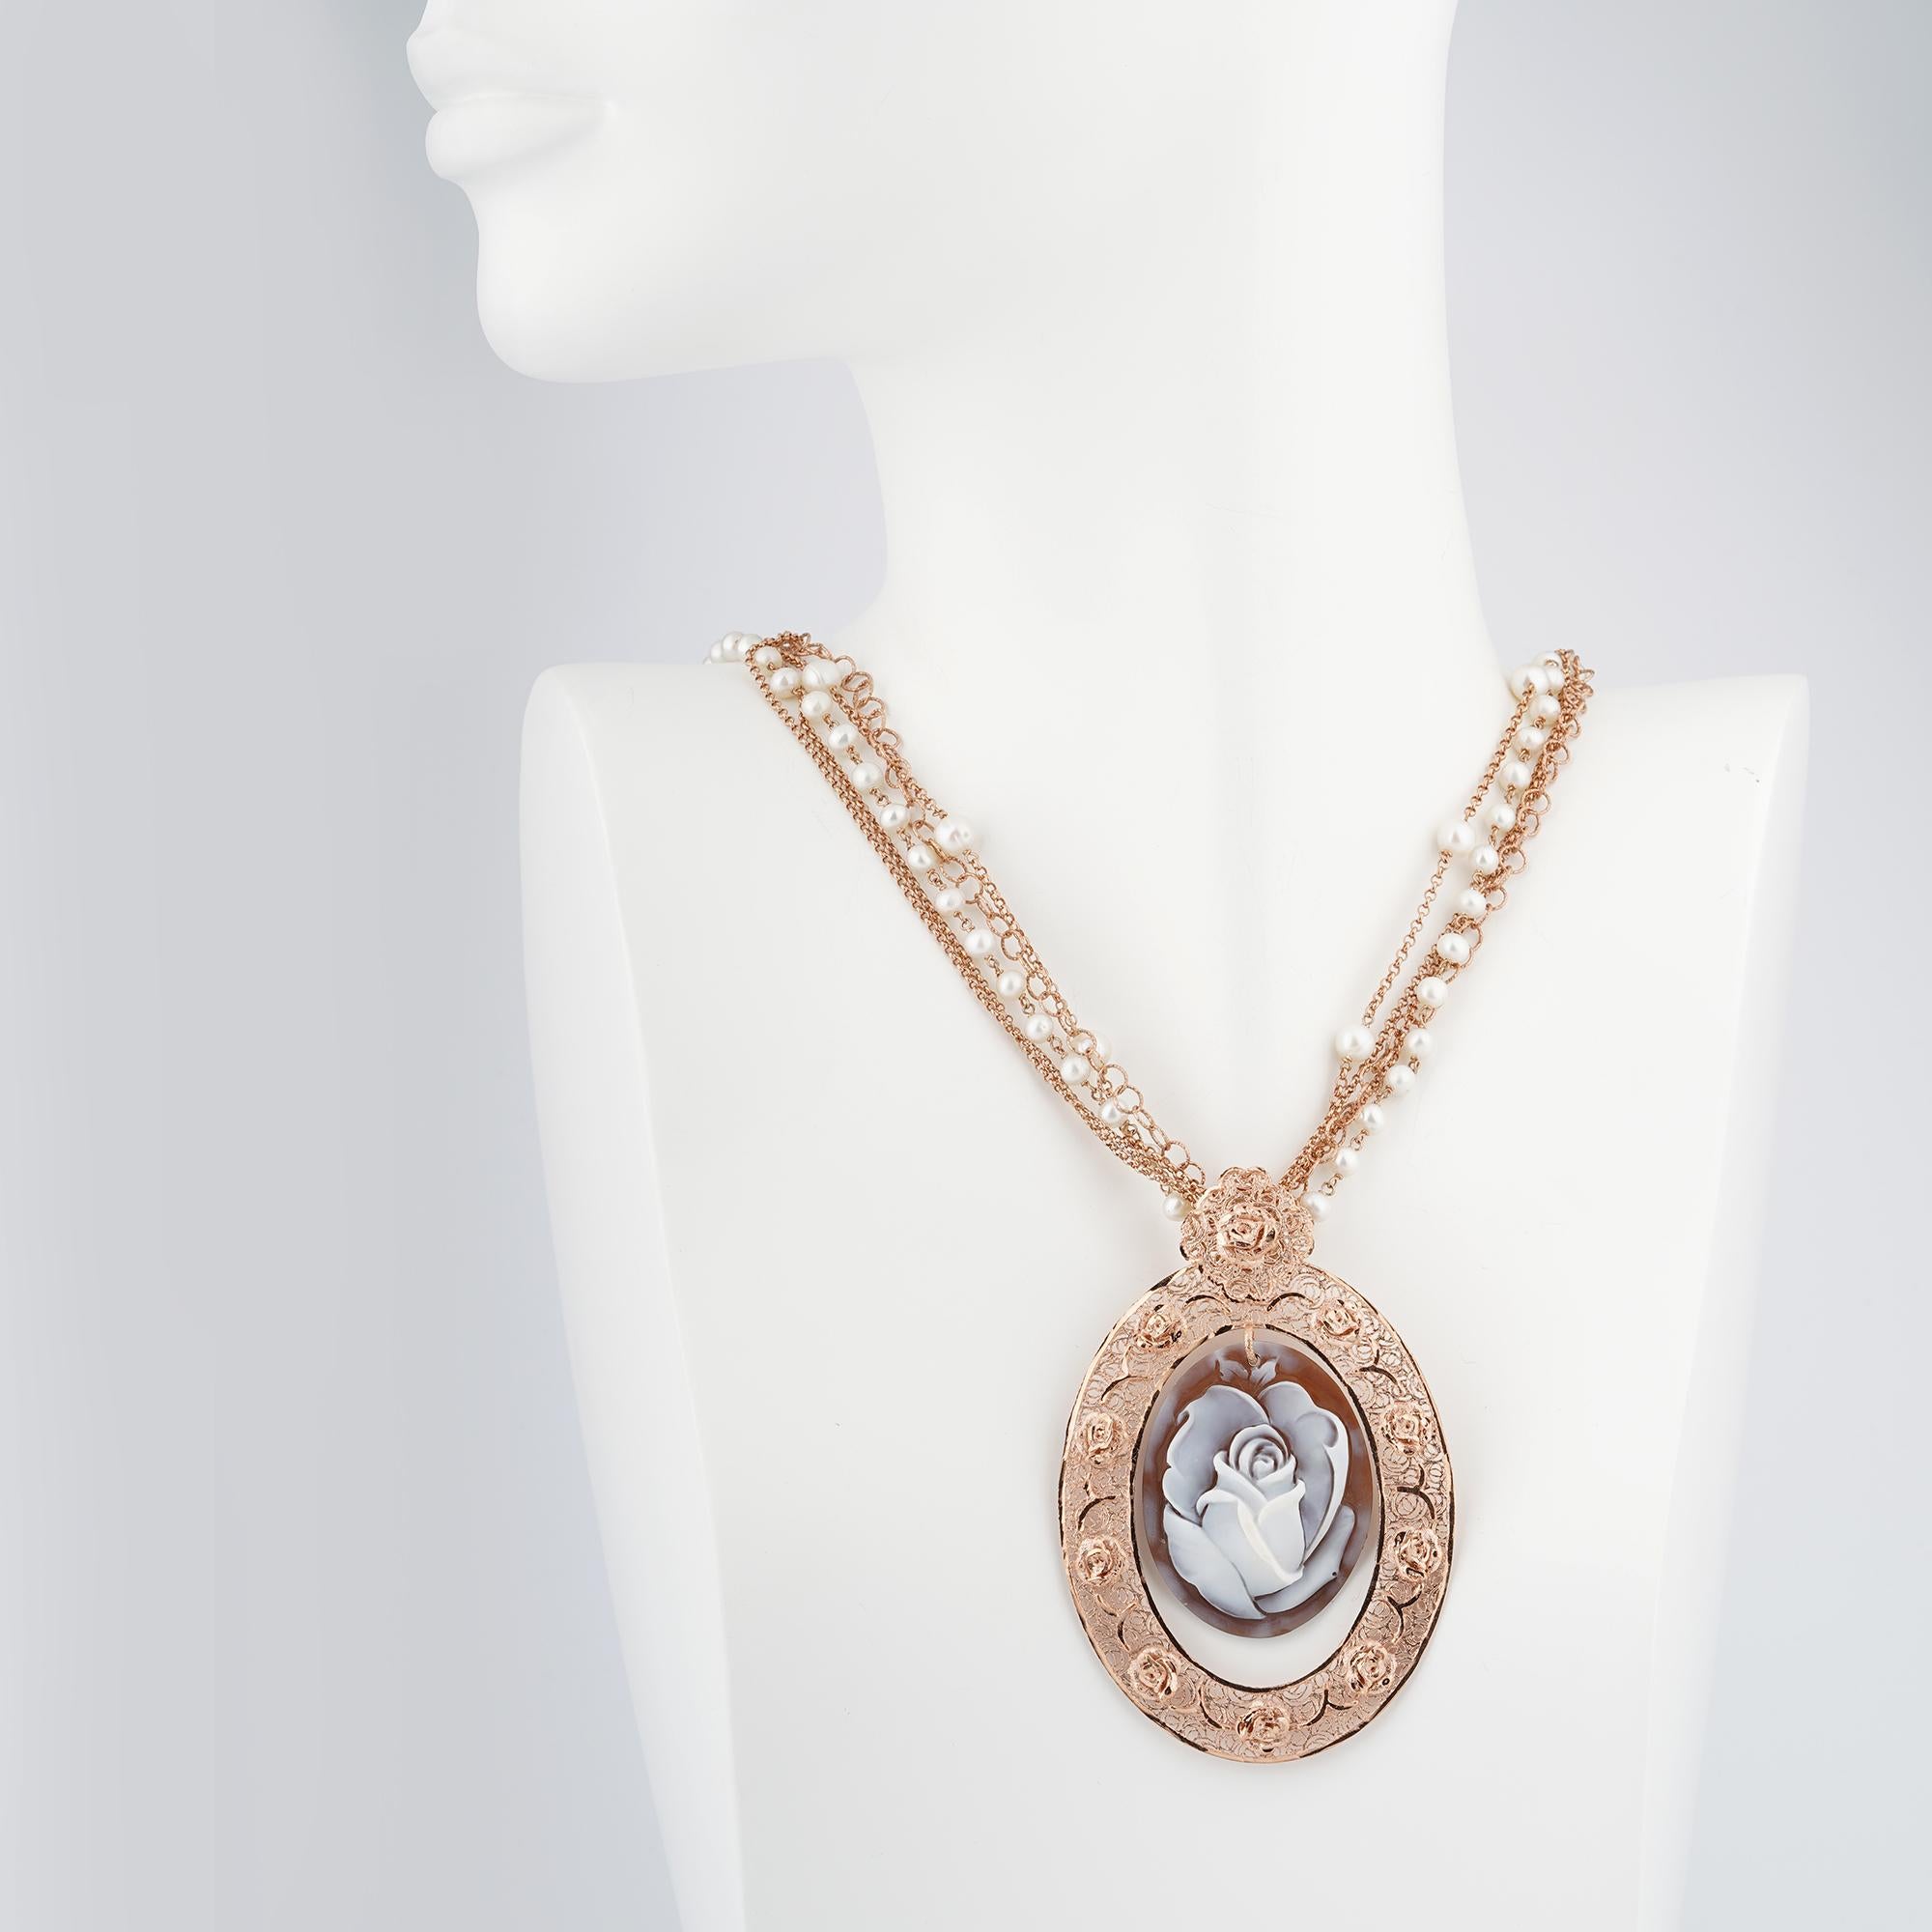 1928 cameo necklace